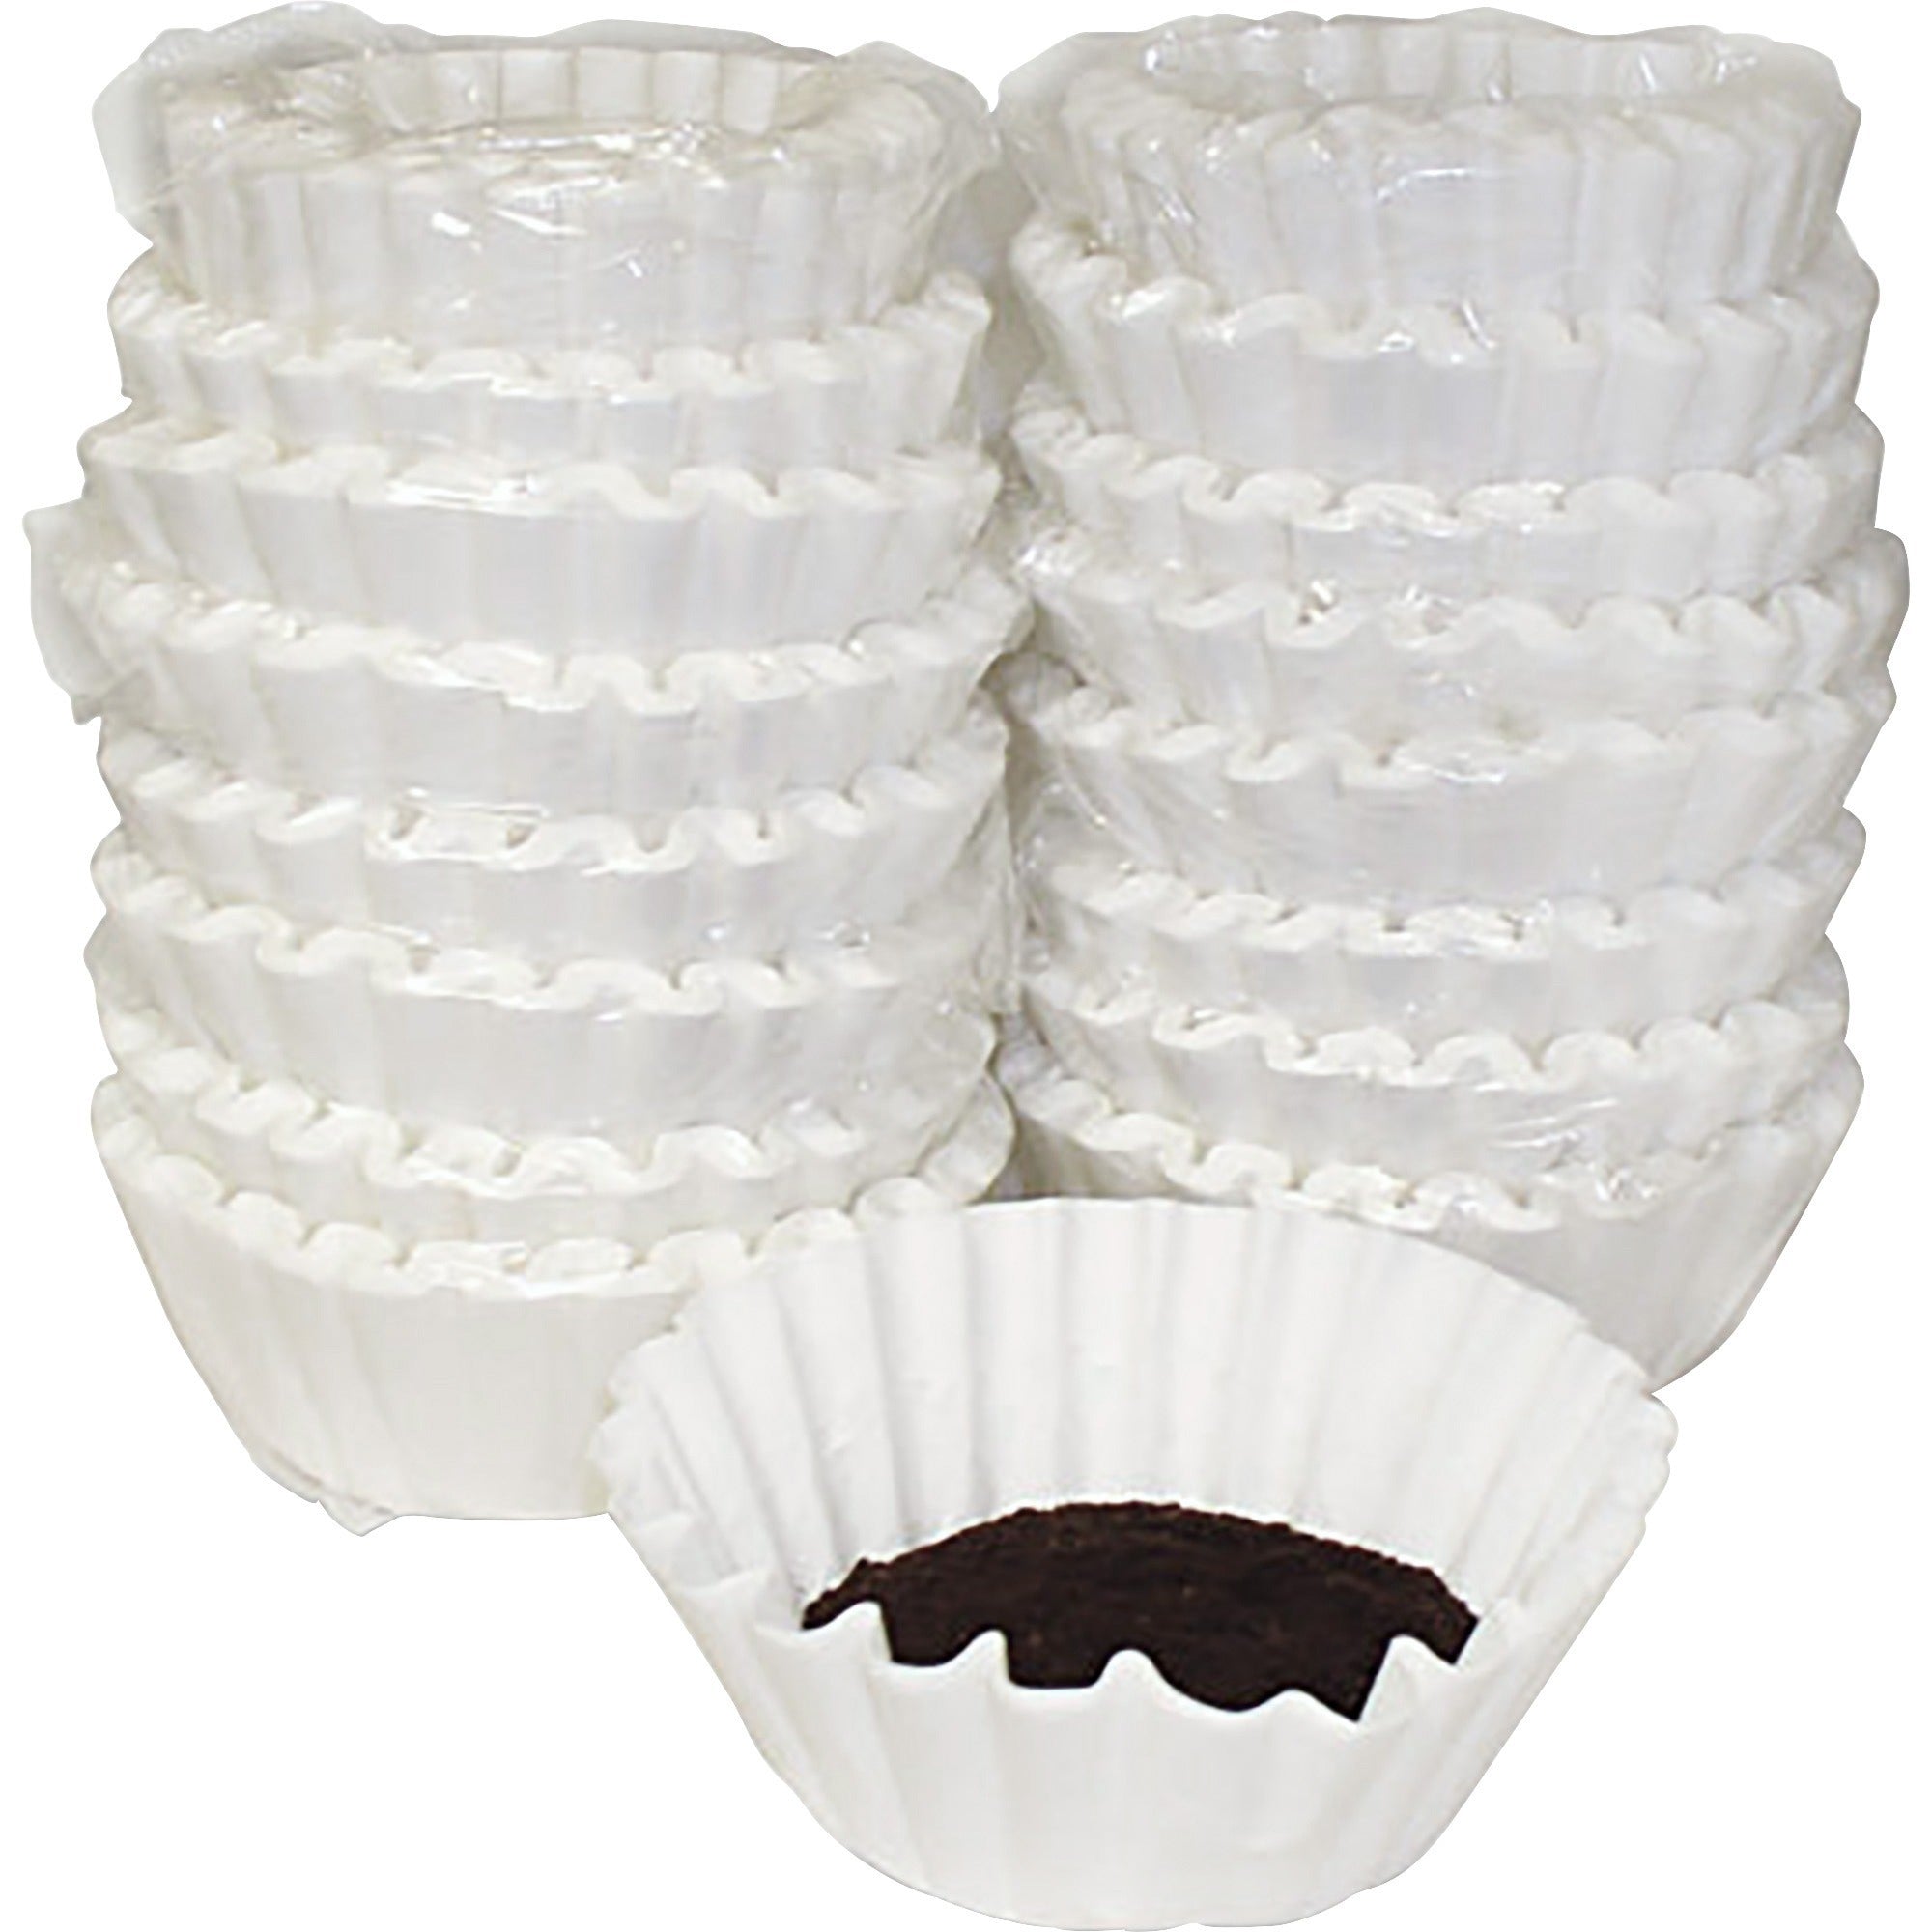 Melitta Basket-style Coffeemaker Coffee Filters - Heavyweight, Tear Resistant, Disposable - 800 / Carton - White - 